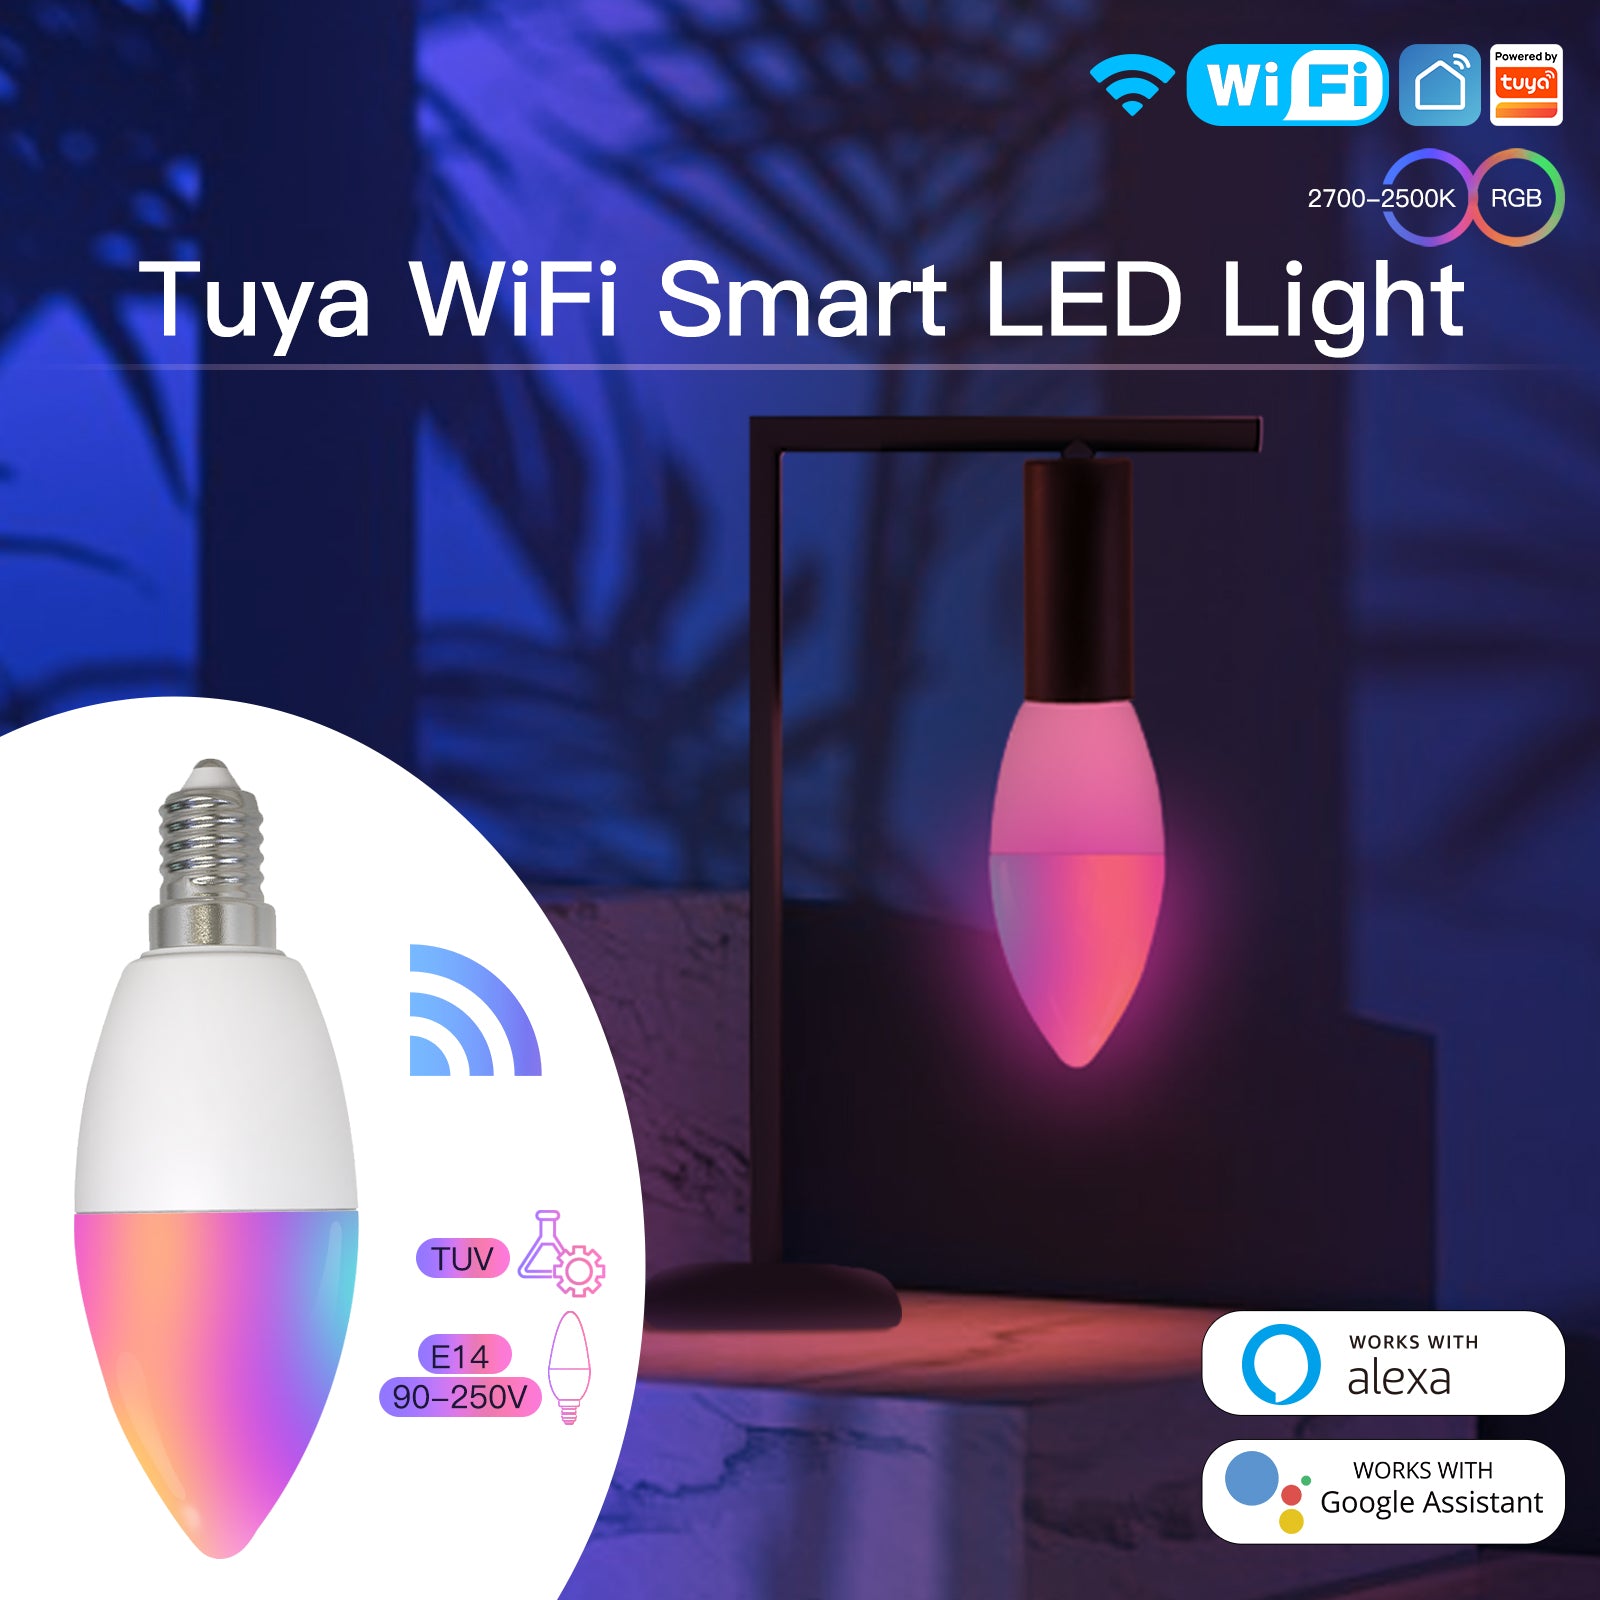 Tuya WiFi Smart LED Light